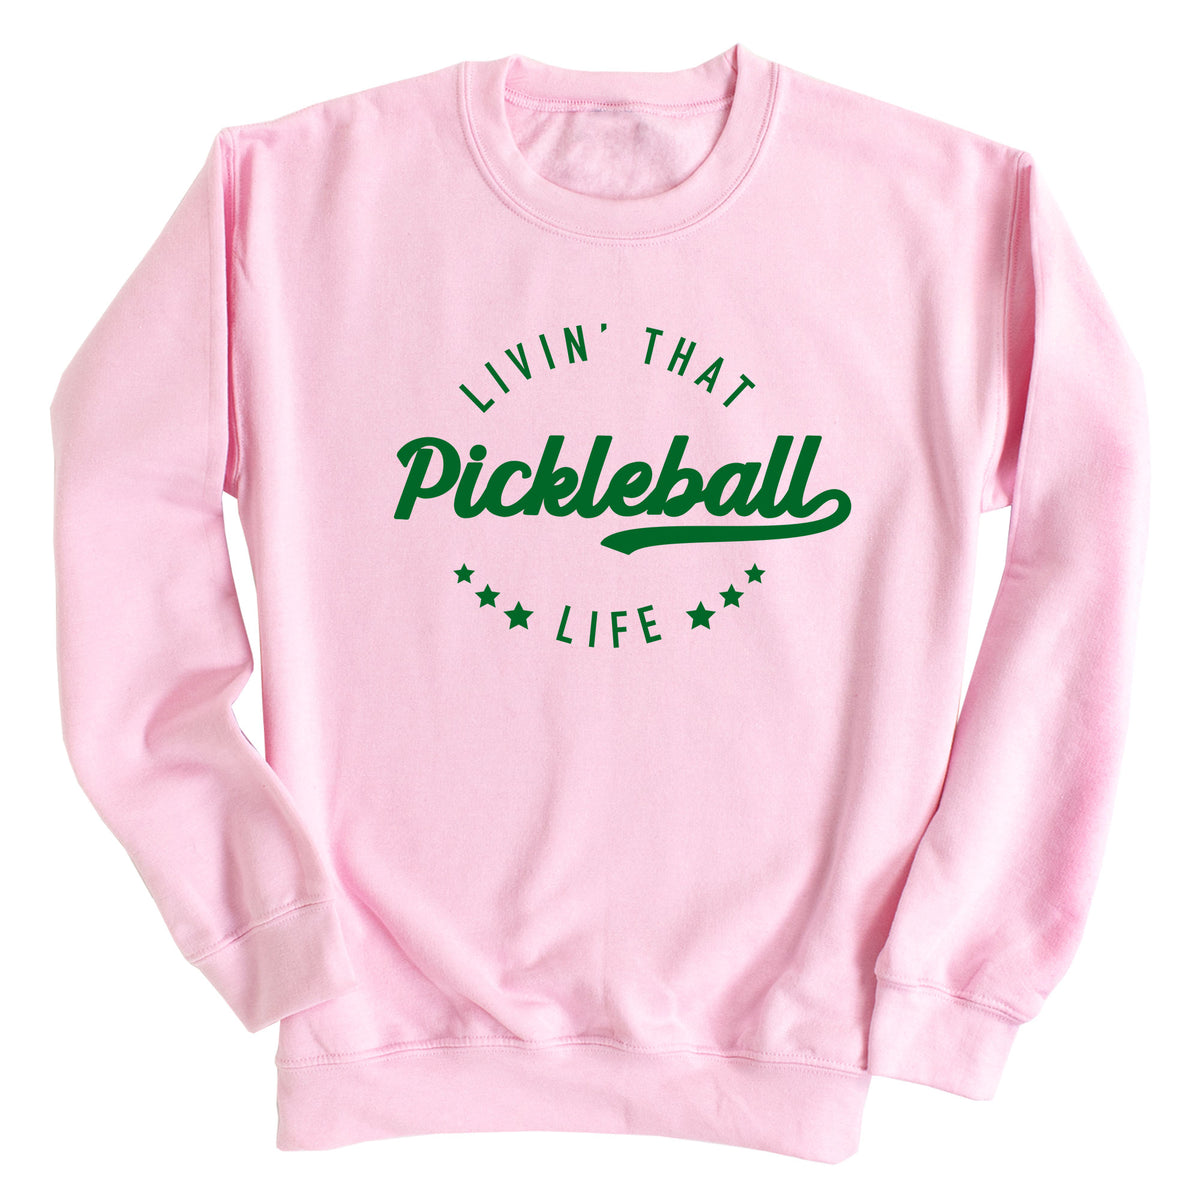 Livin' That Pickleball Life Sweatshirt (GREEN INK)